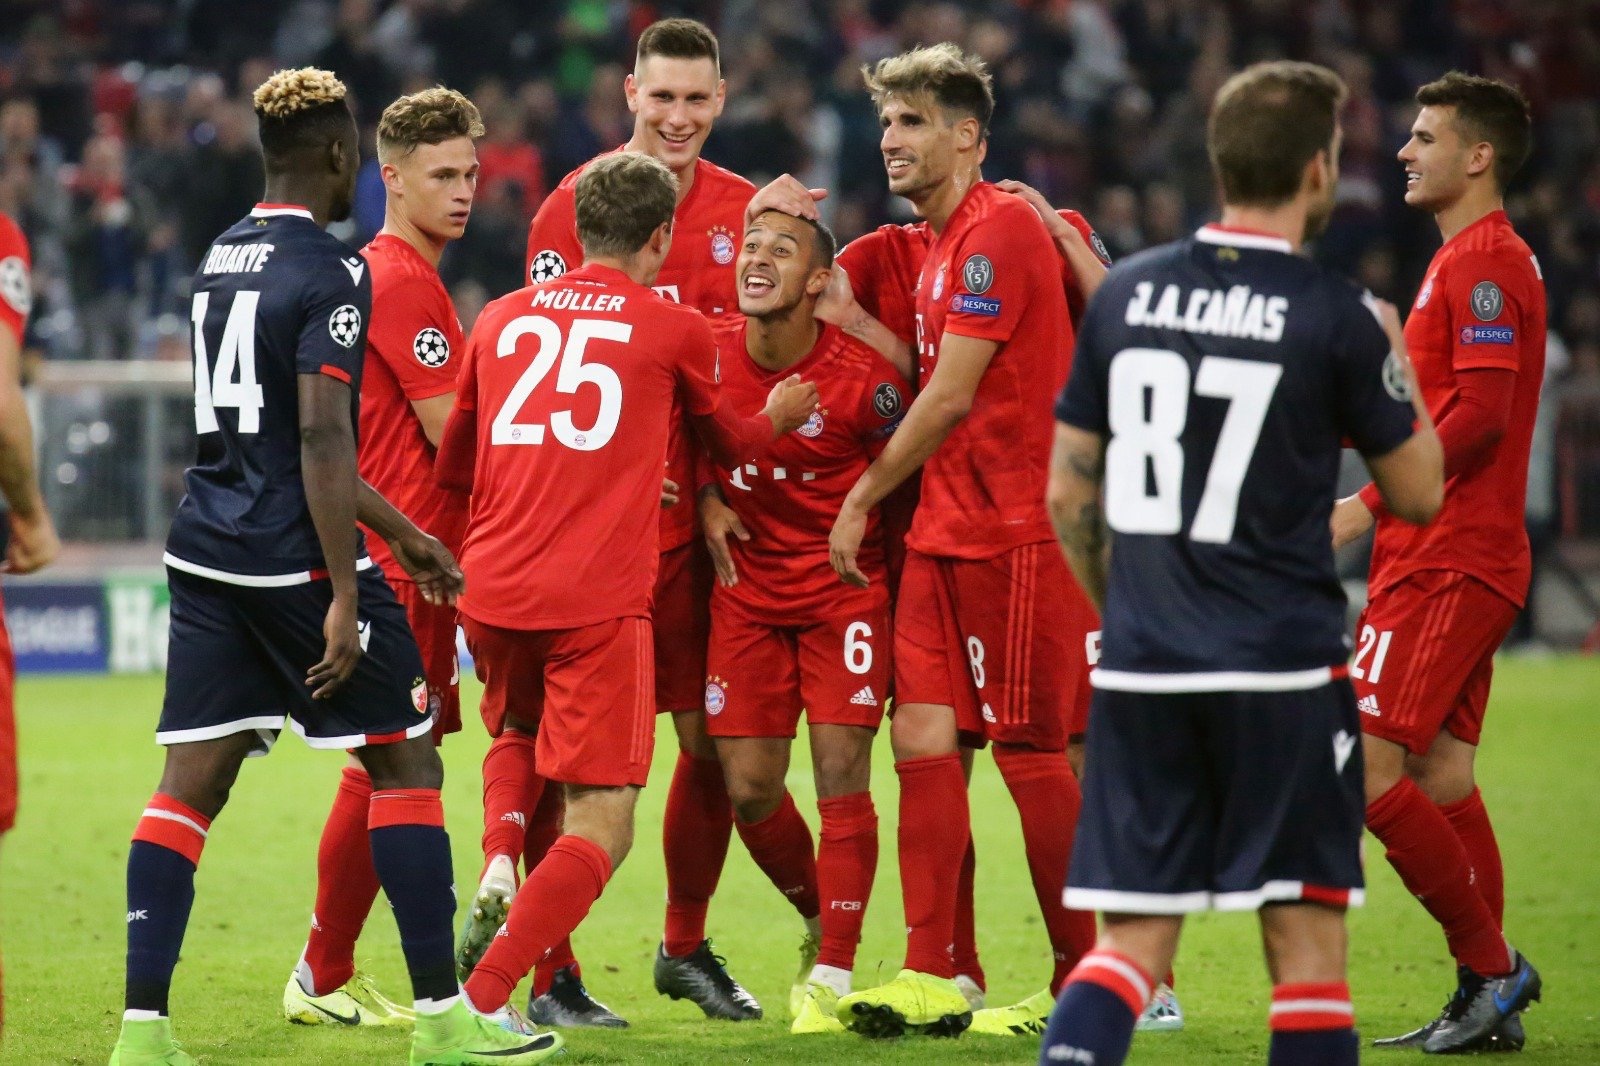 #LigueDesChampions - Le Bayern Munich domine l’Etoile Rouge (3-0)